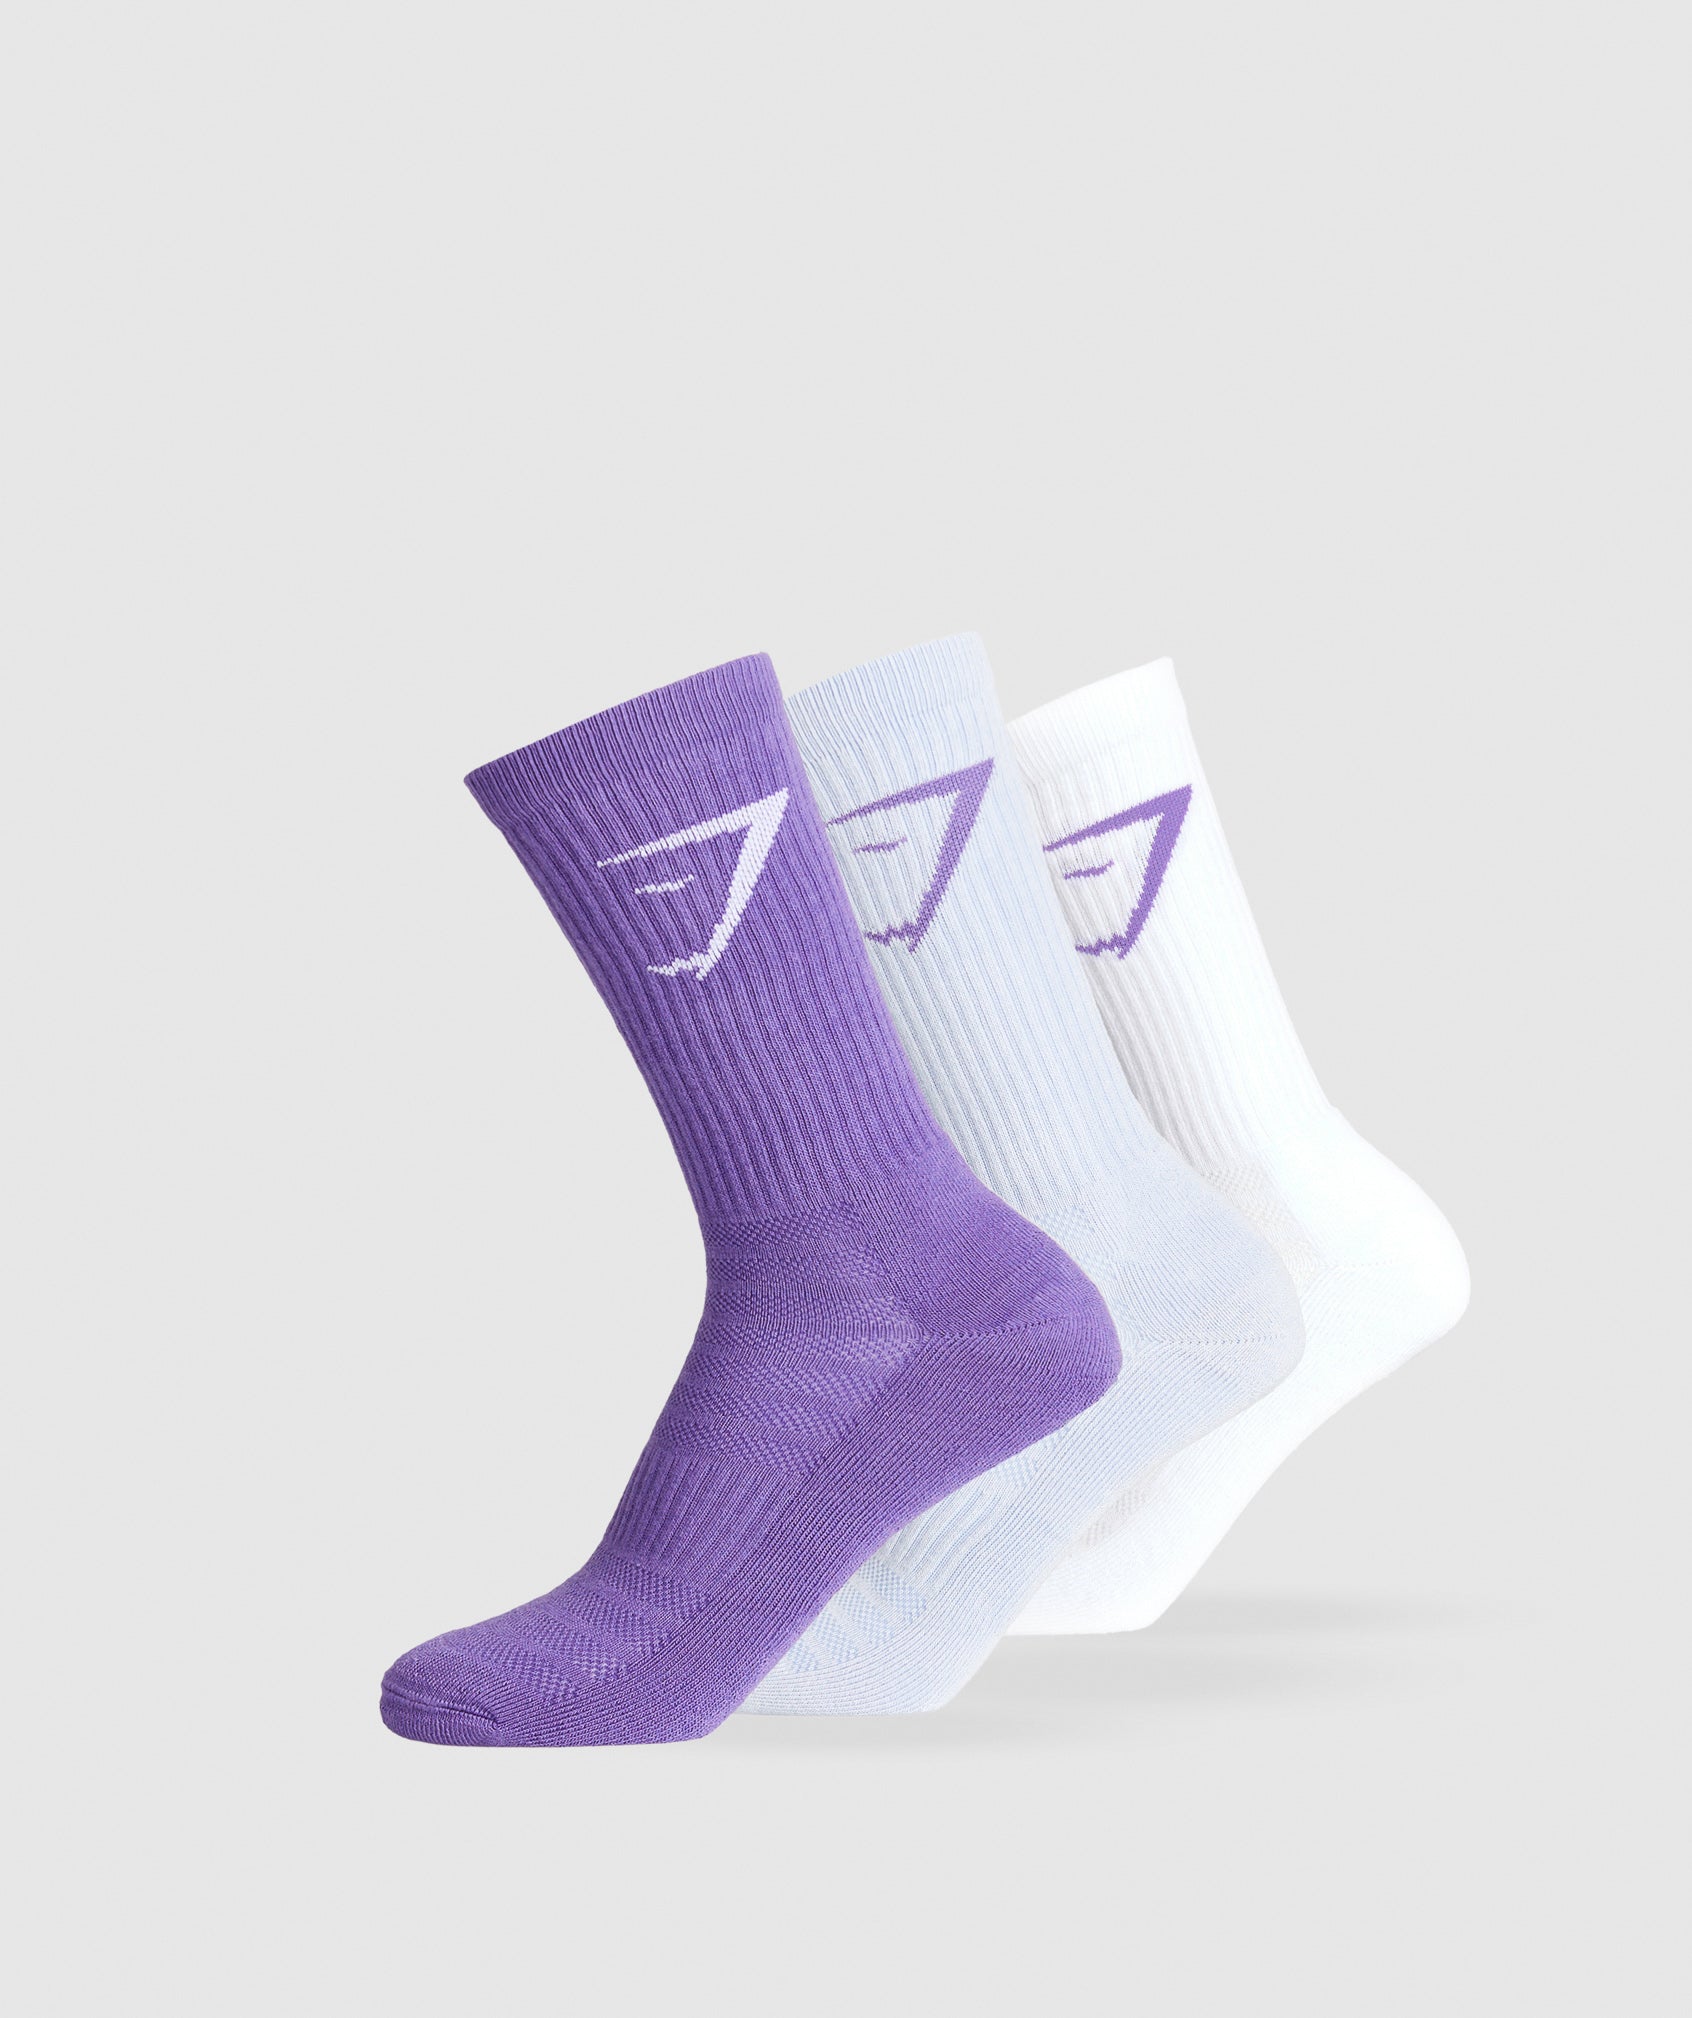 Crew Socks 3pk in Stellar Purple/Silver Lilac/White